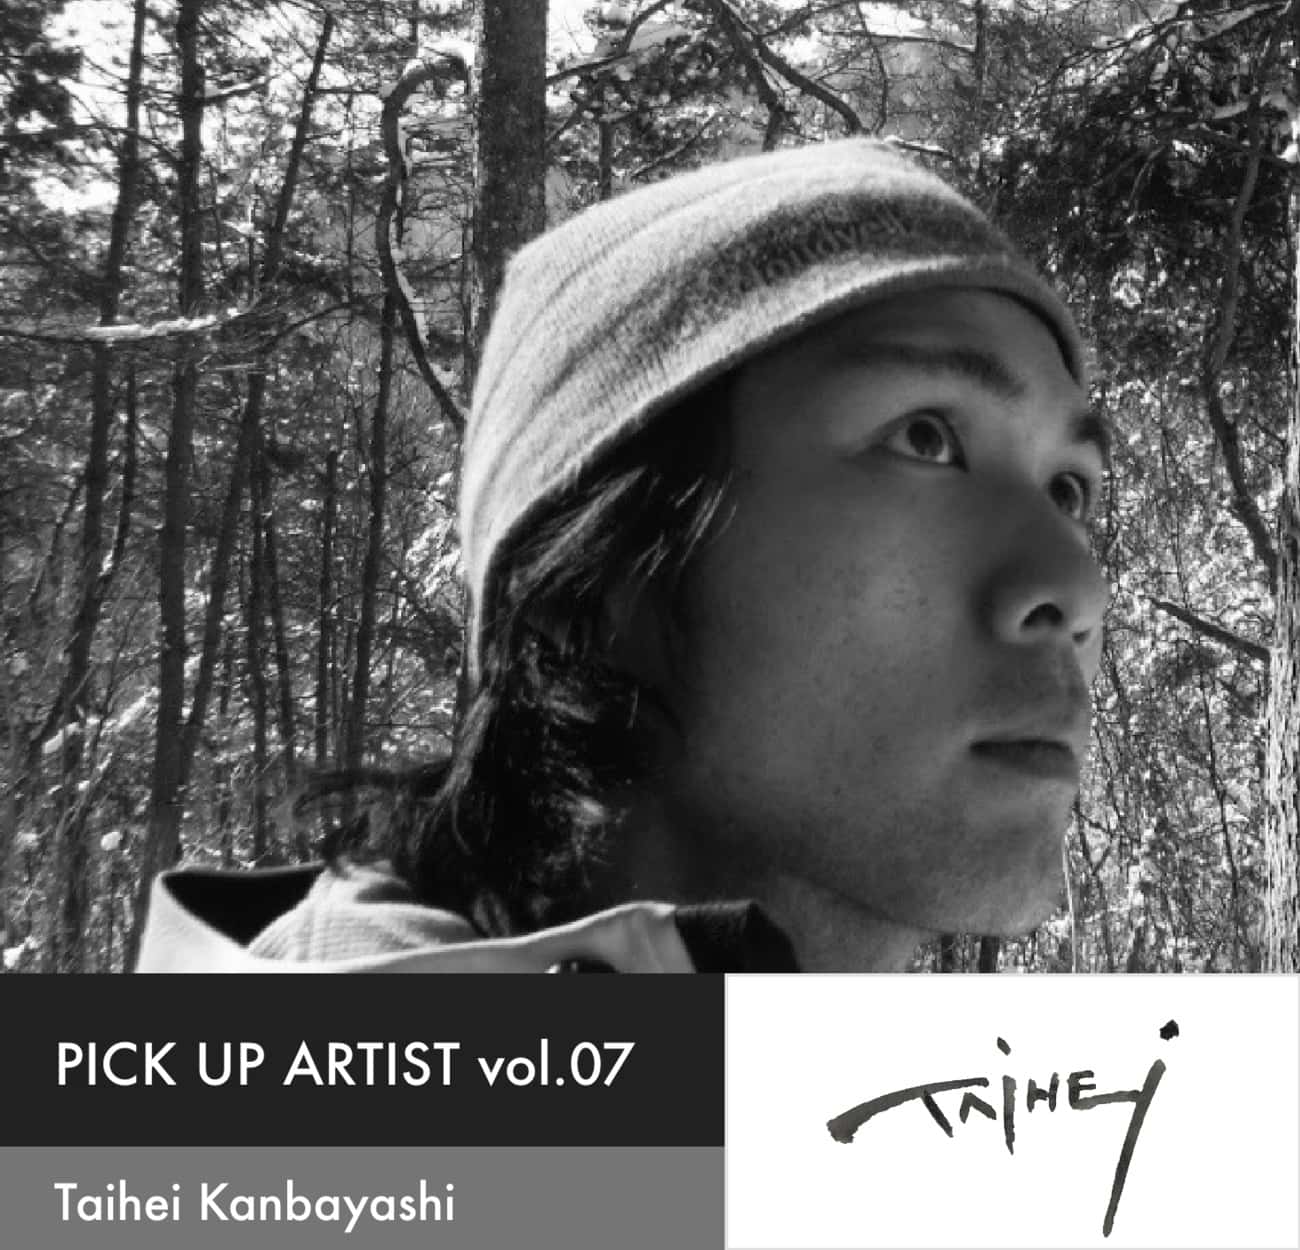 Pick up artist vol.07 Taihei Kanbayashi